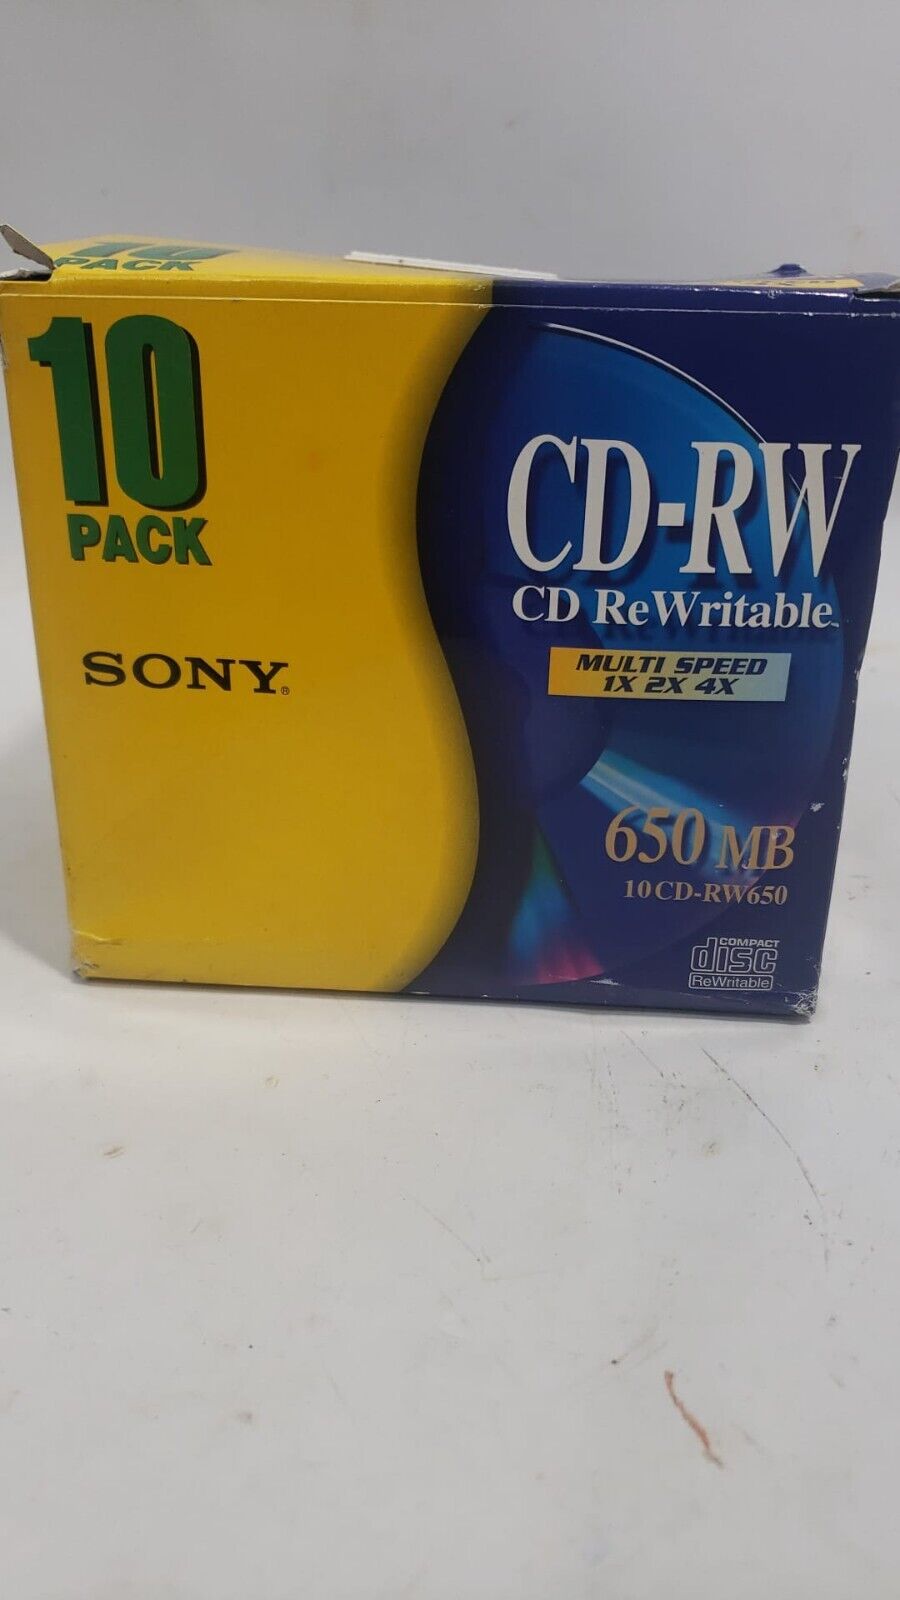 10 Pack Sony CD-RW 650MB - Multi Speed 1,2,4X New